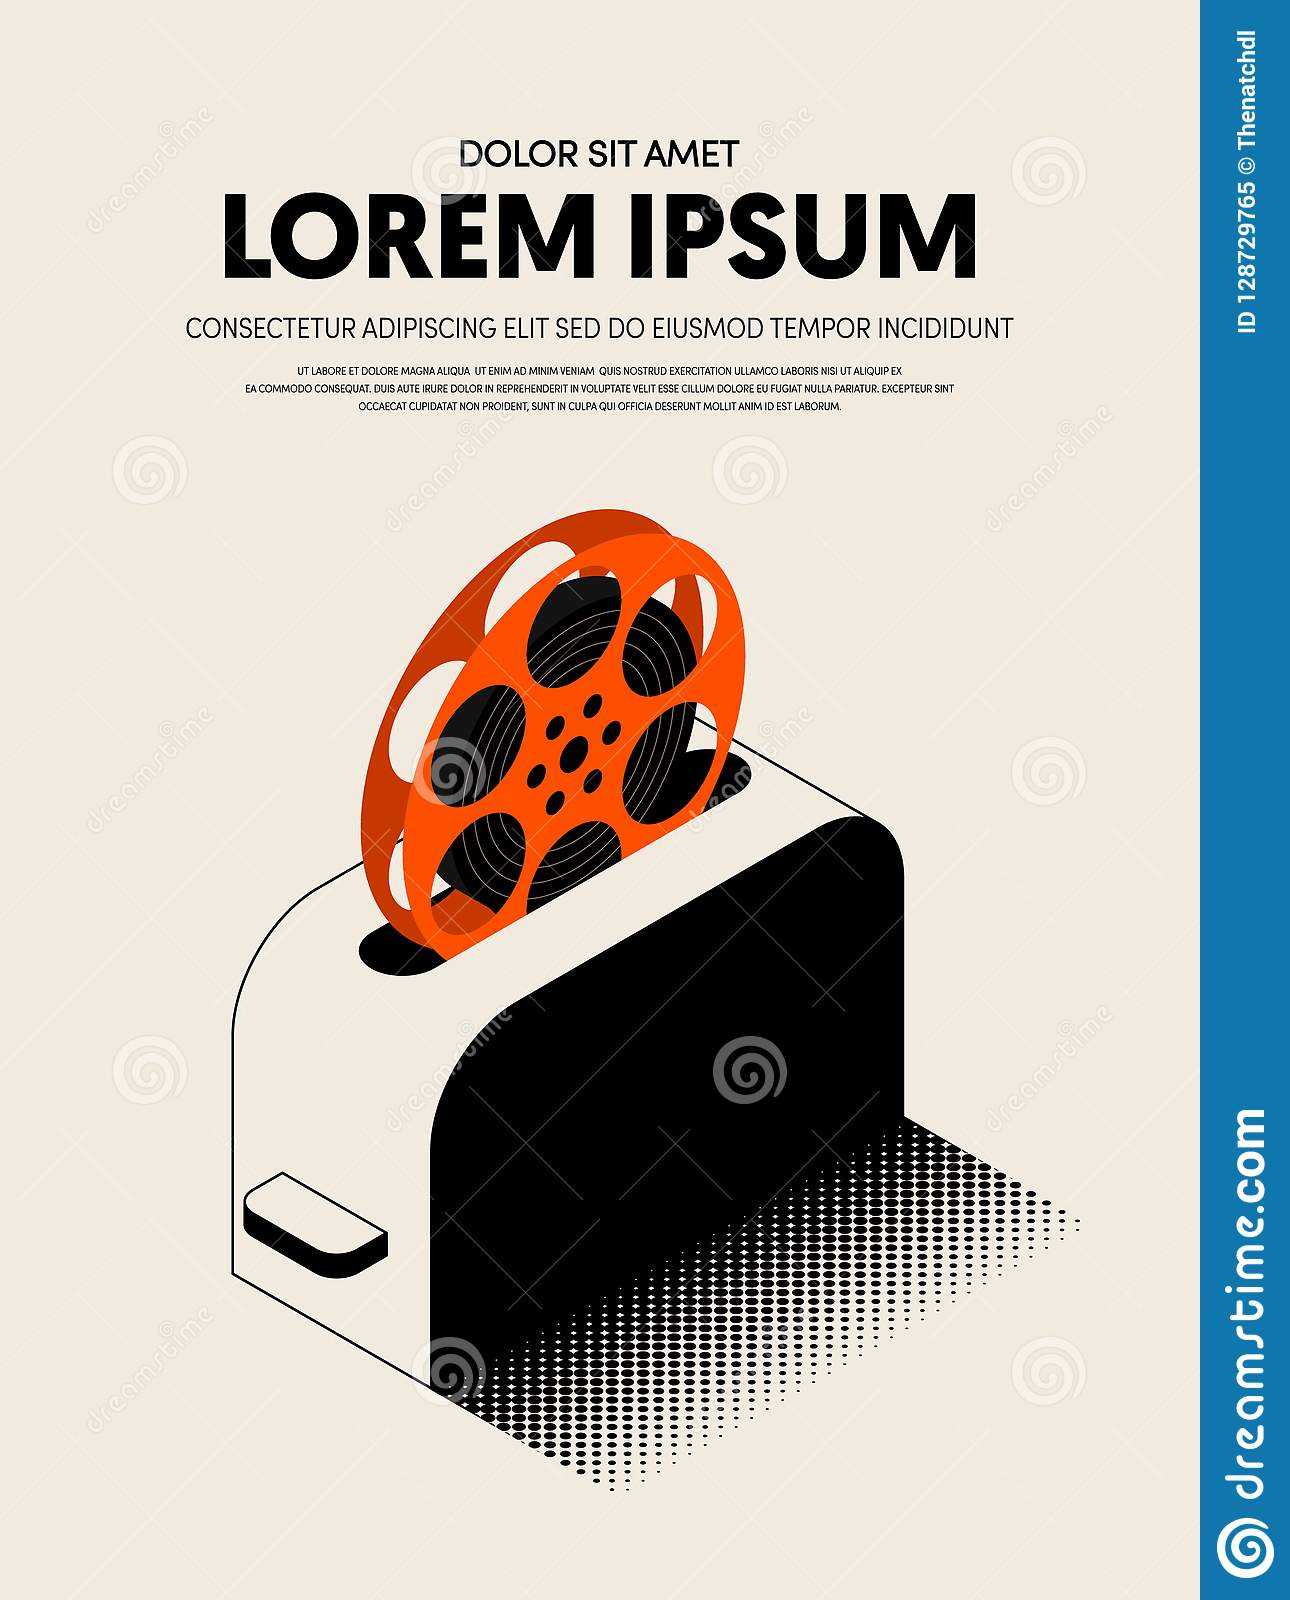 Movie And Film Festival Poster Template Design Modern Retro With Film Festival Brochure Template